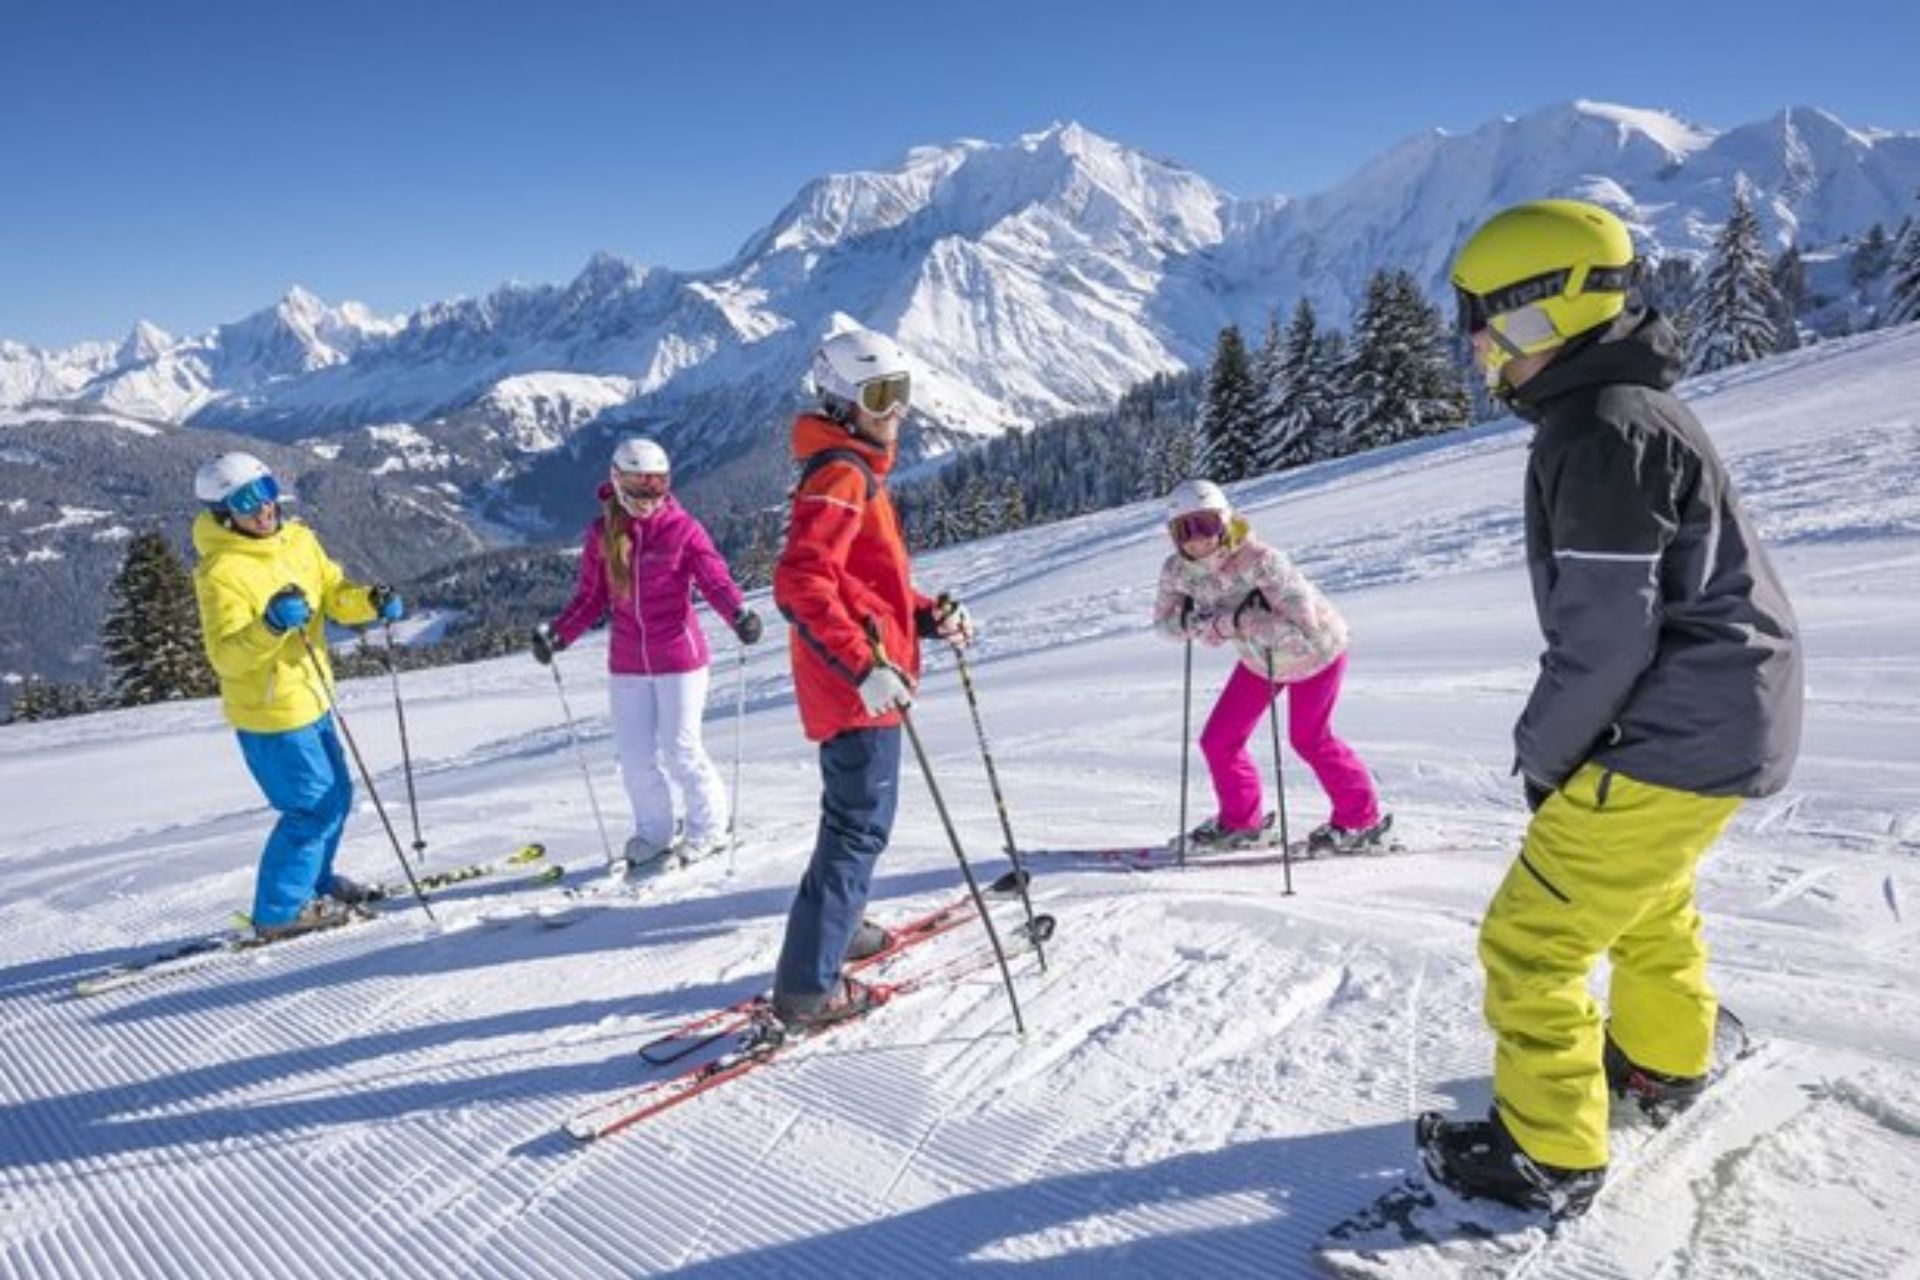 Skis alpins avec fixations homme – Cross 550+ noir - Noir - Wedze -  Décathlon